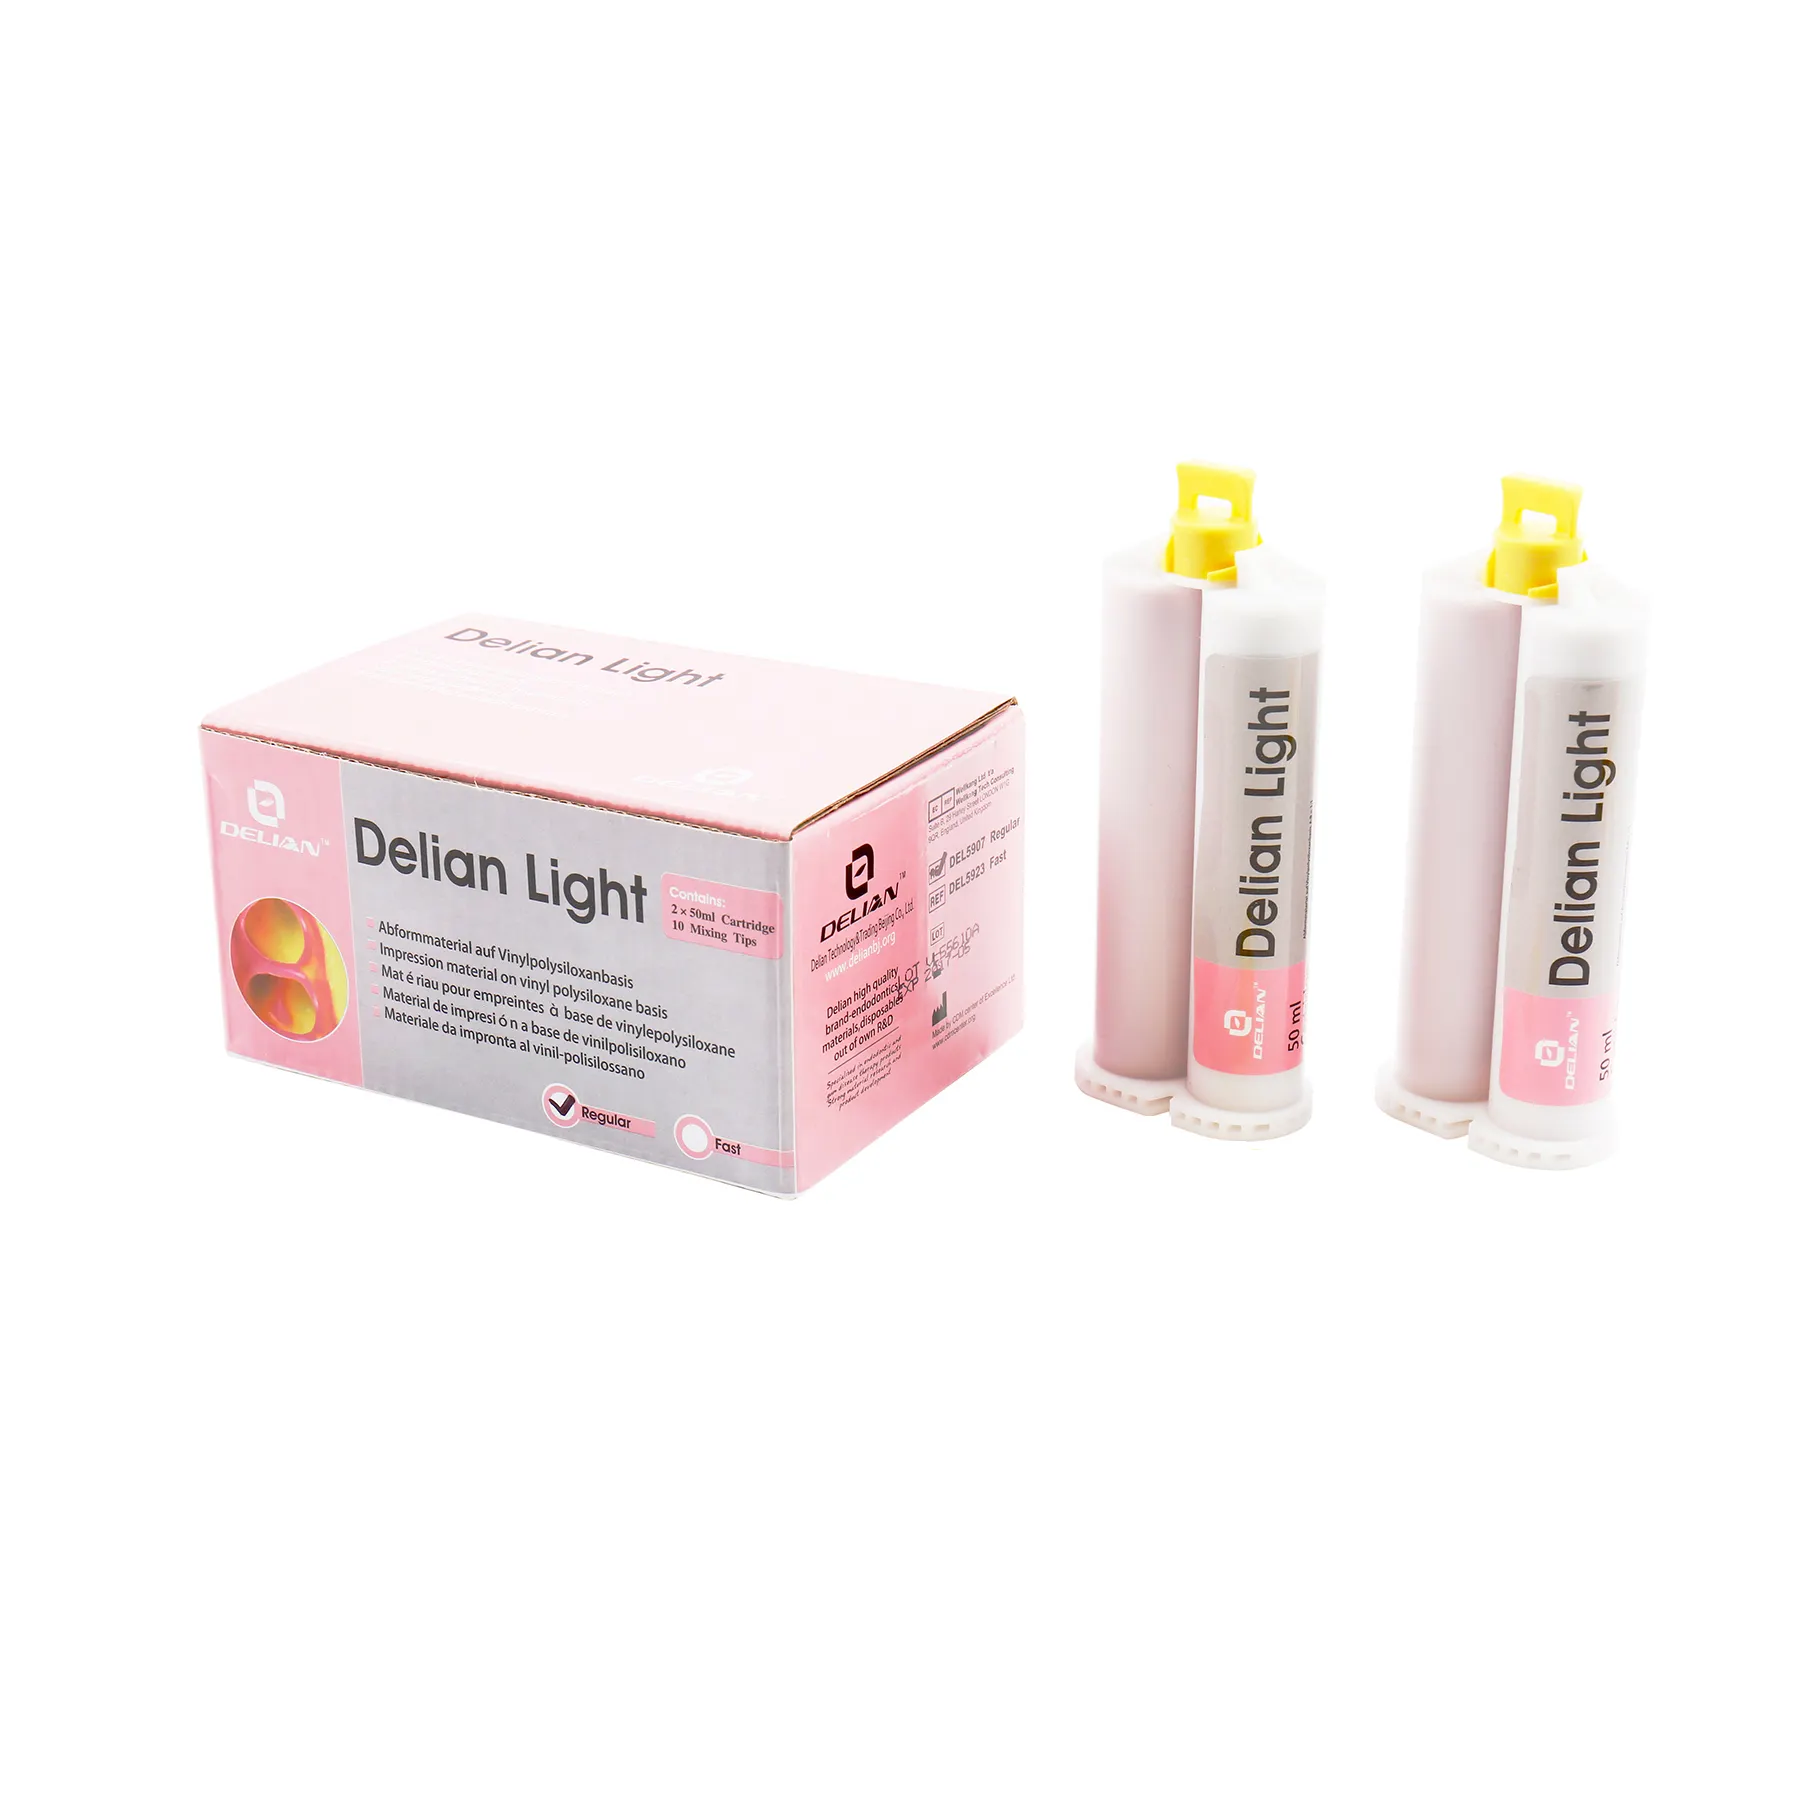 Delian Light Body Dental Silicone Impression Material